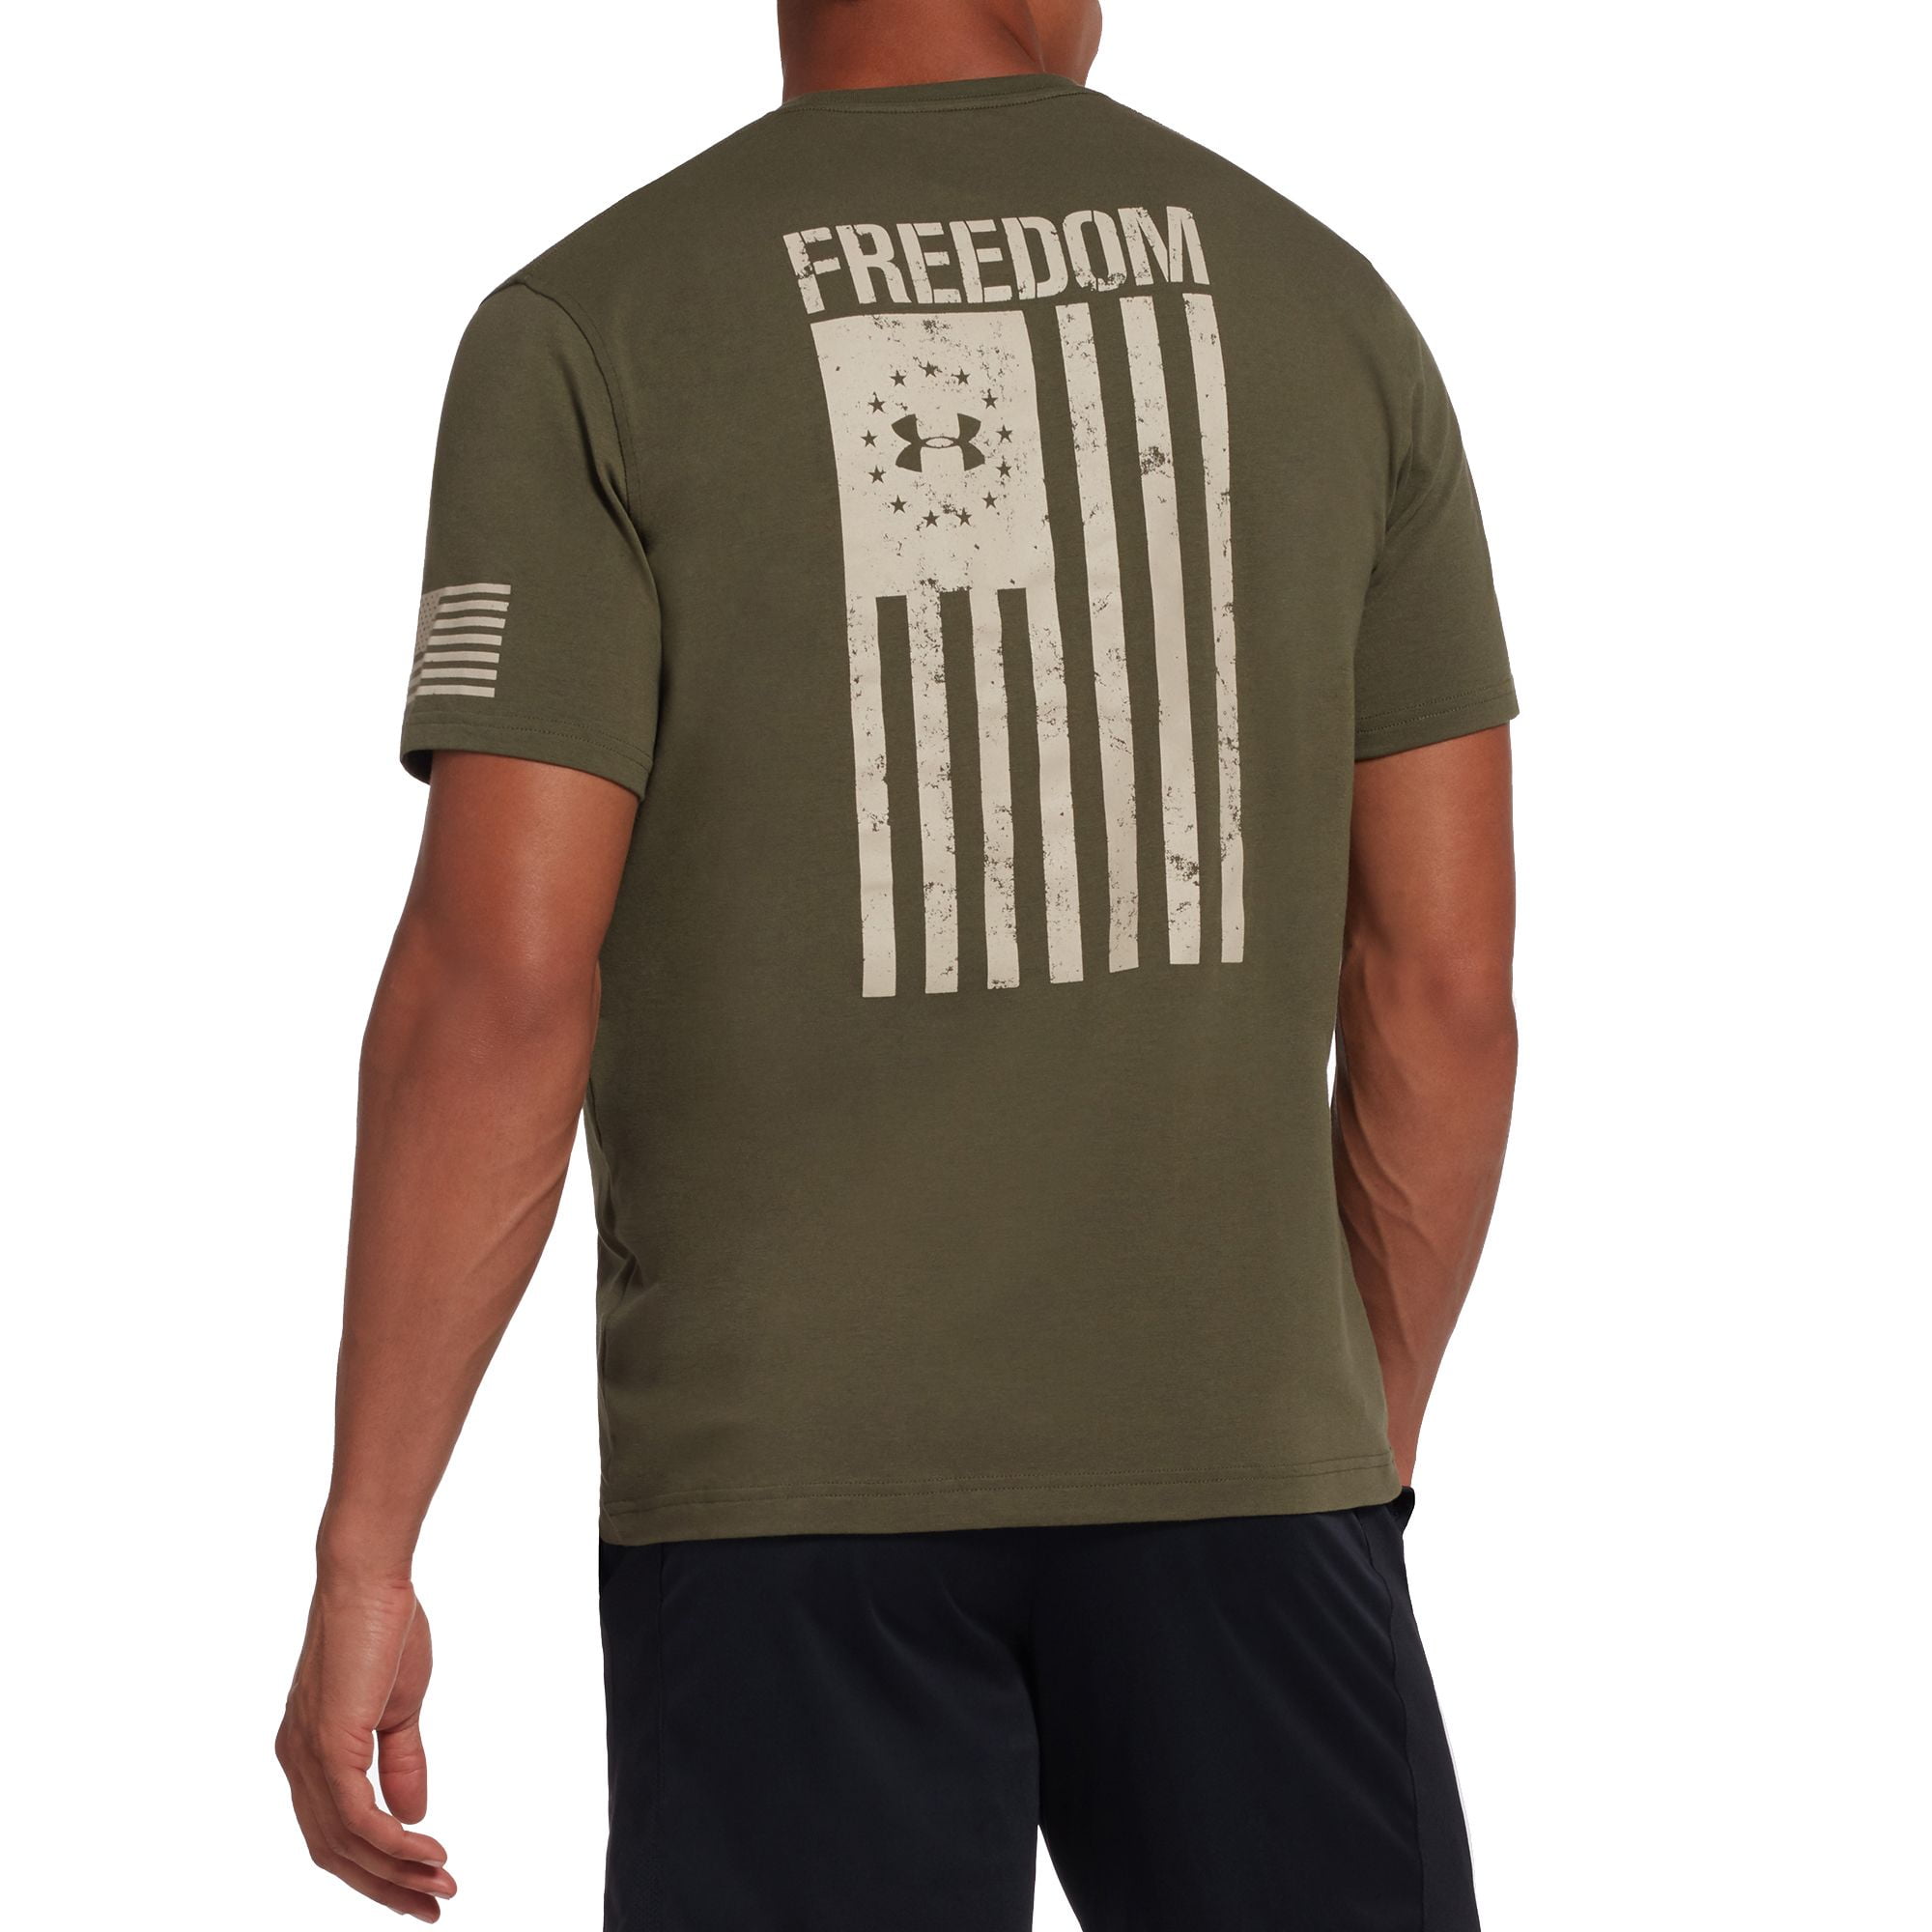 under armor freedom shirt